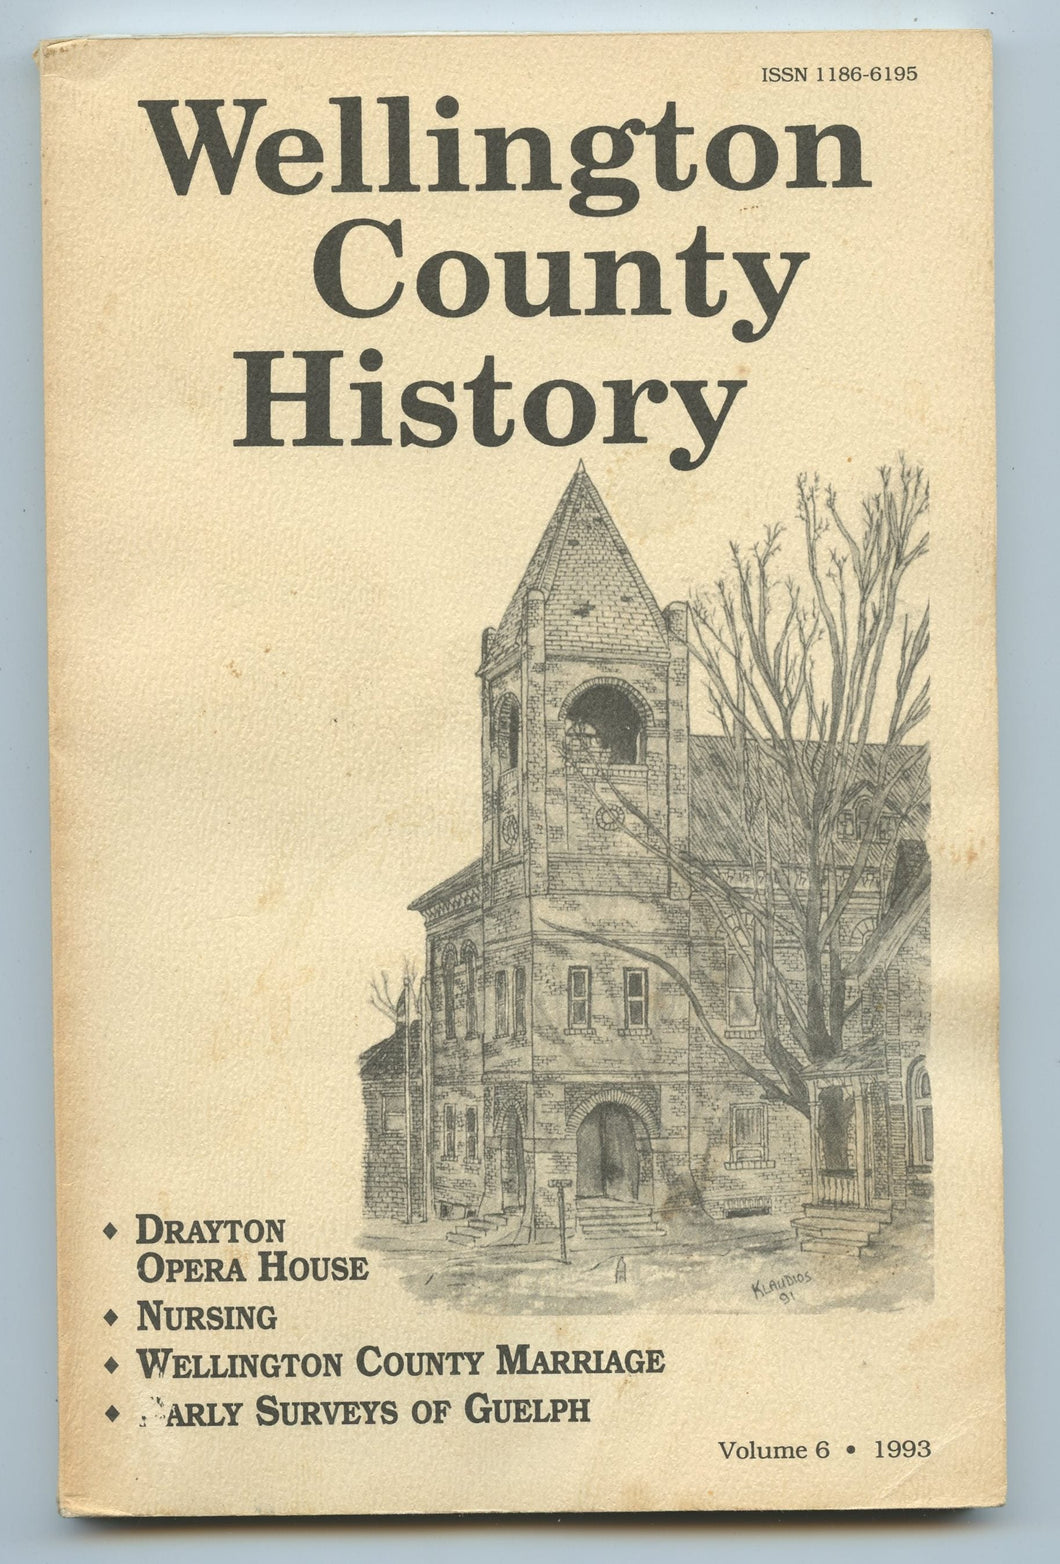 Wellington County History Vol. 6 1993